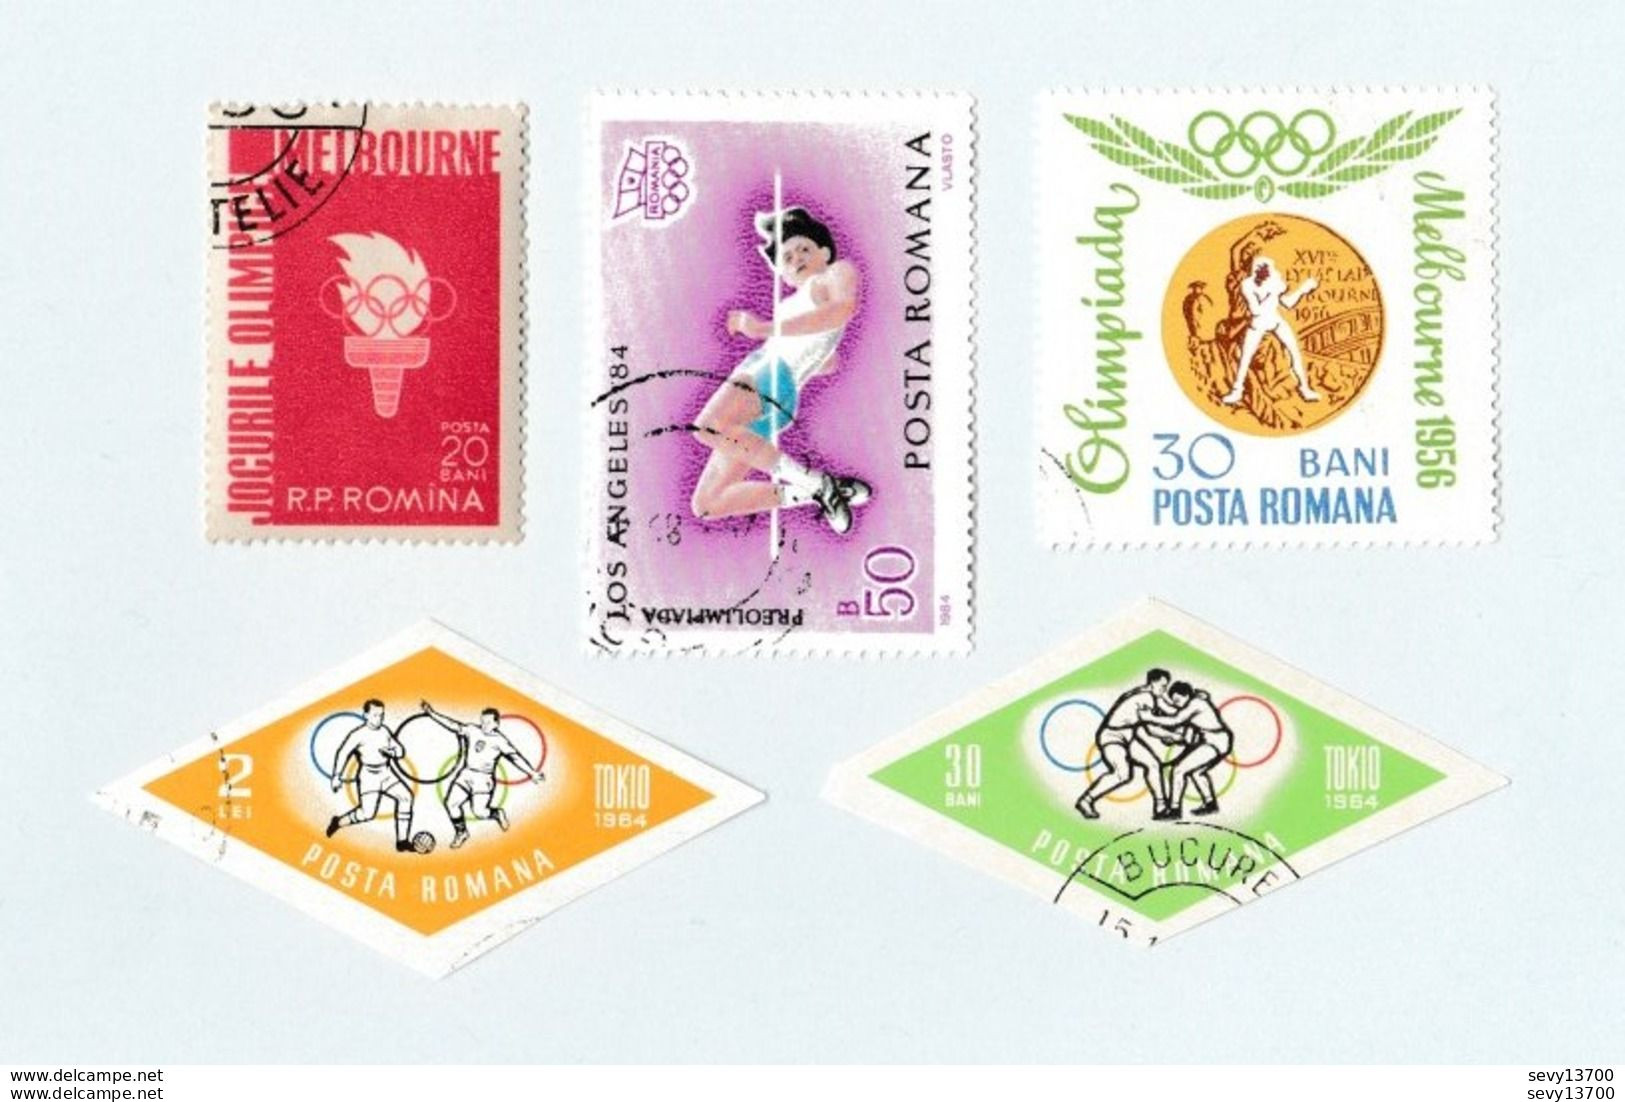 Roumanie lot de 28 timbres - 22 timbres jeux olympiques et 6 timbres sports